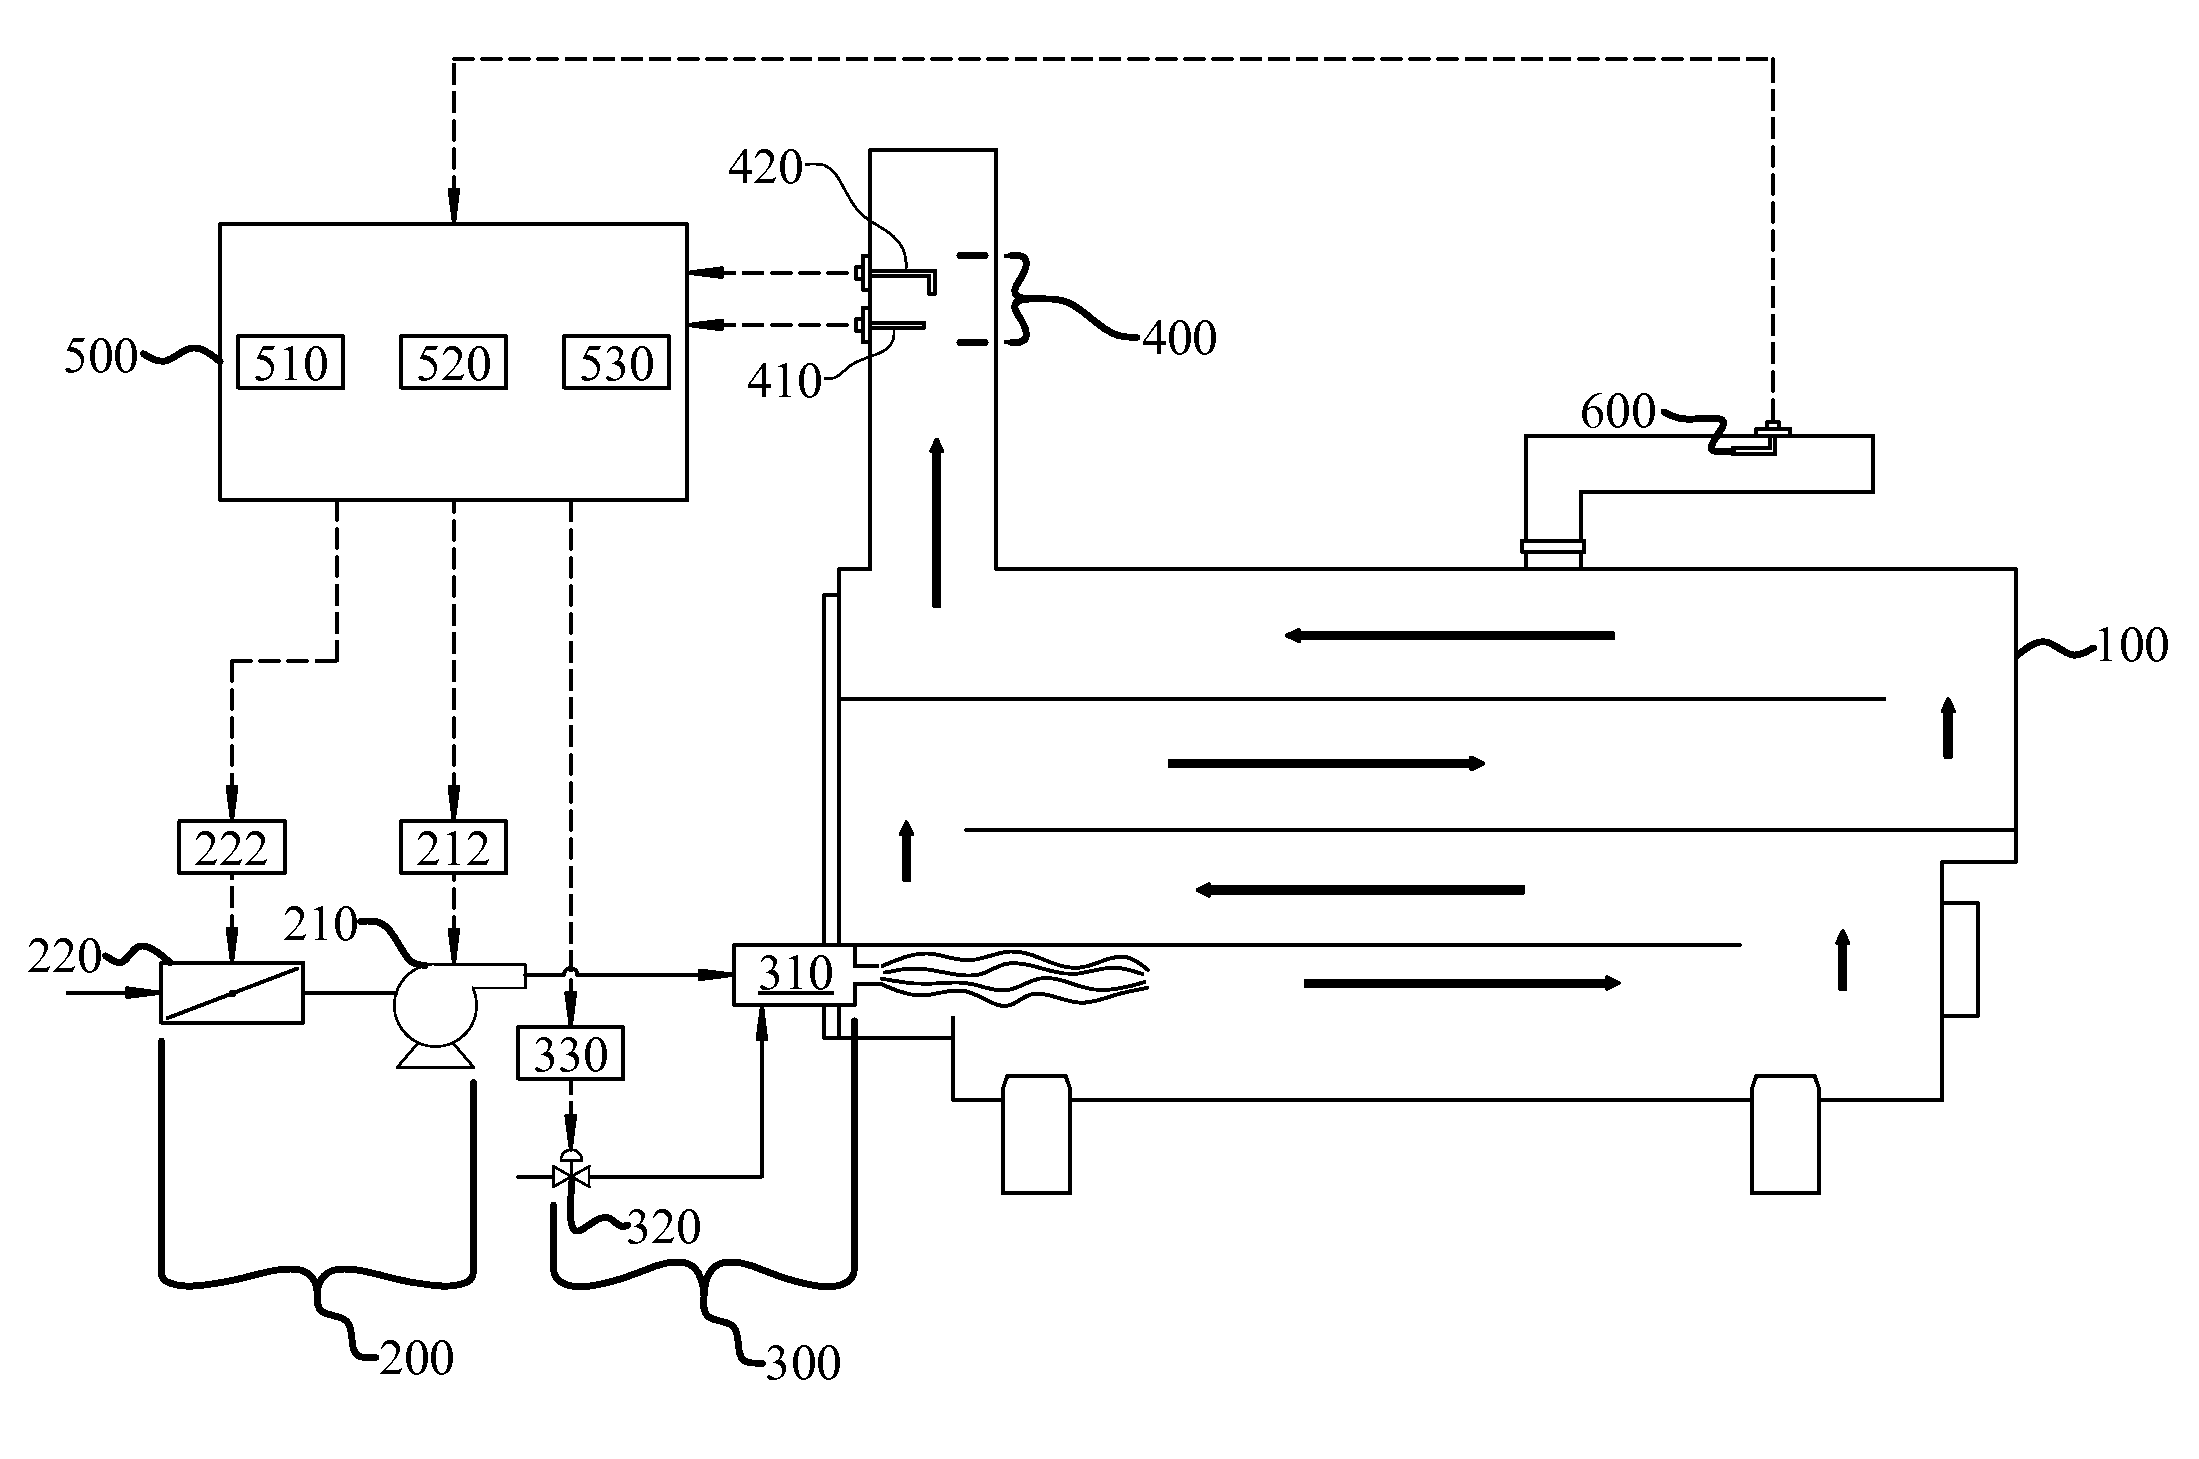 Boiler control system